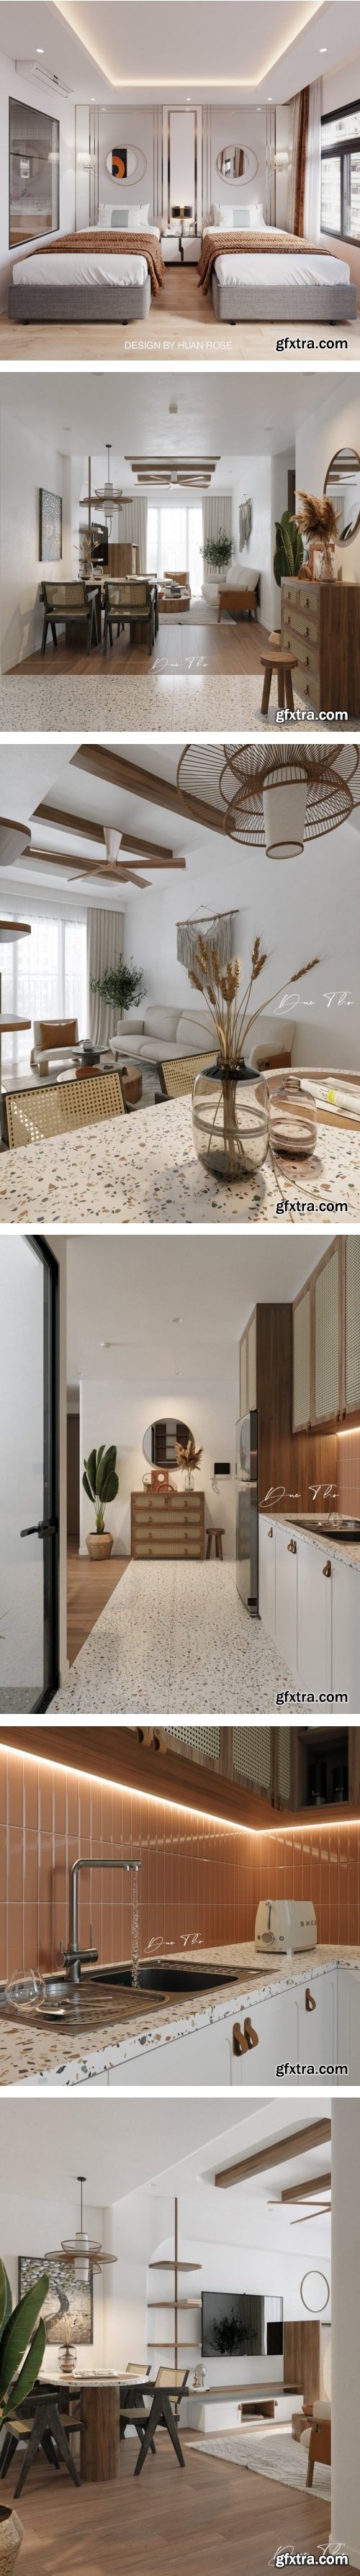 Kitchen – Livingroom Scene By Le Duc Tho